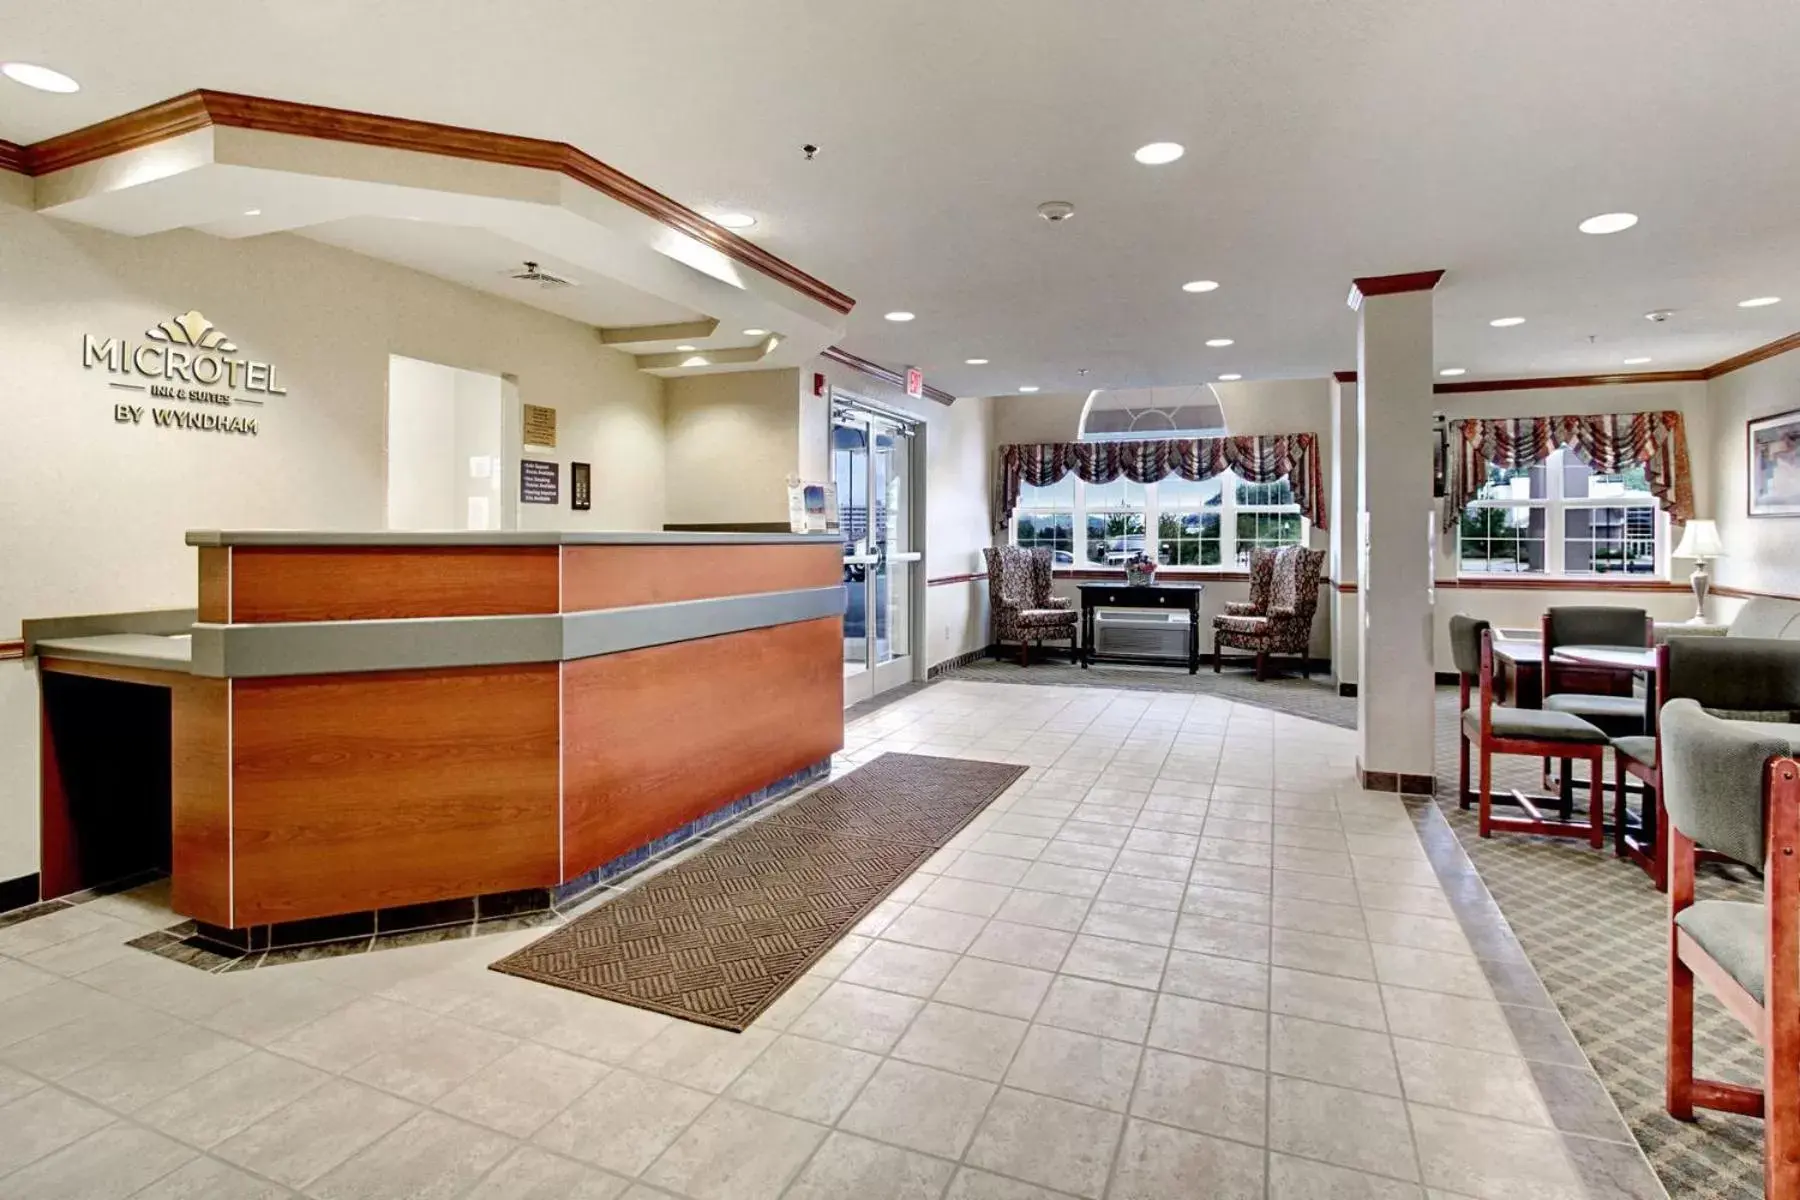 Lobby or reception in Microtel Inn & Suites by Wyndham Bridgeport